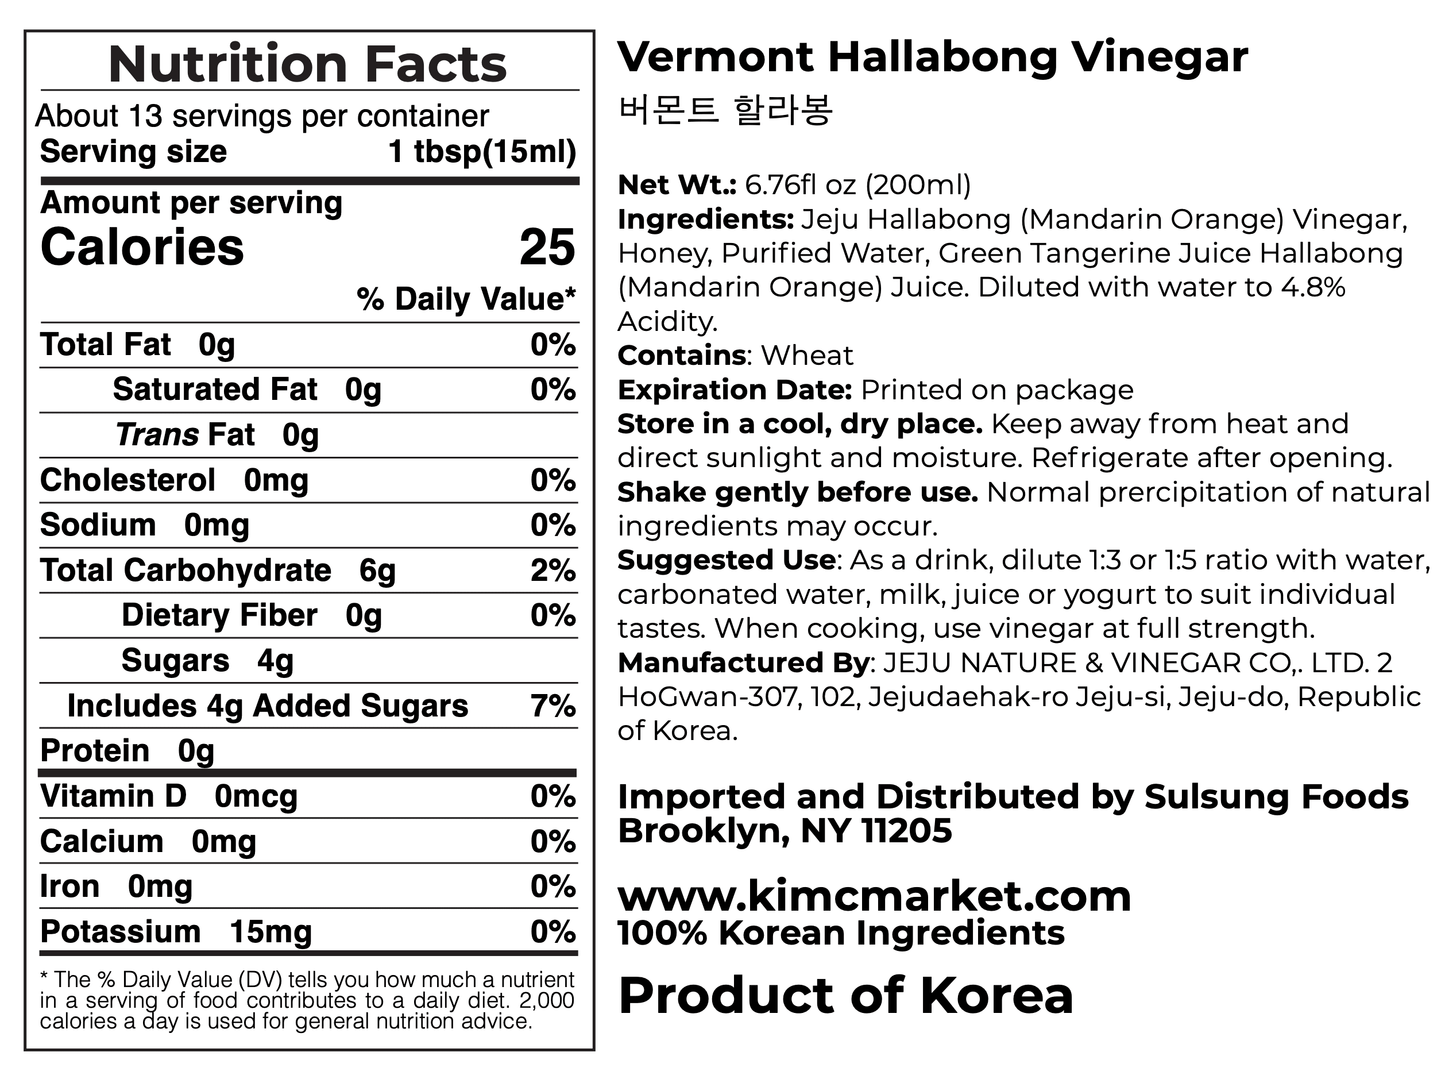 Jeju Hallabong Vinegar - Kim'C Market